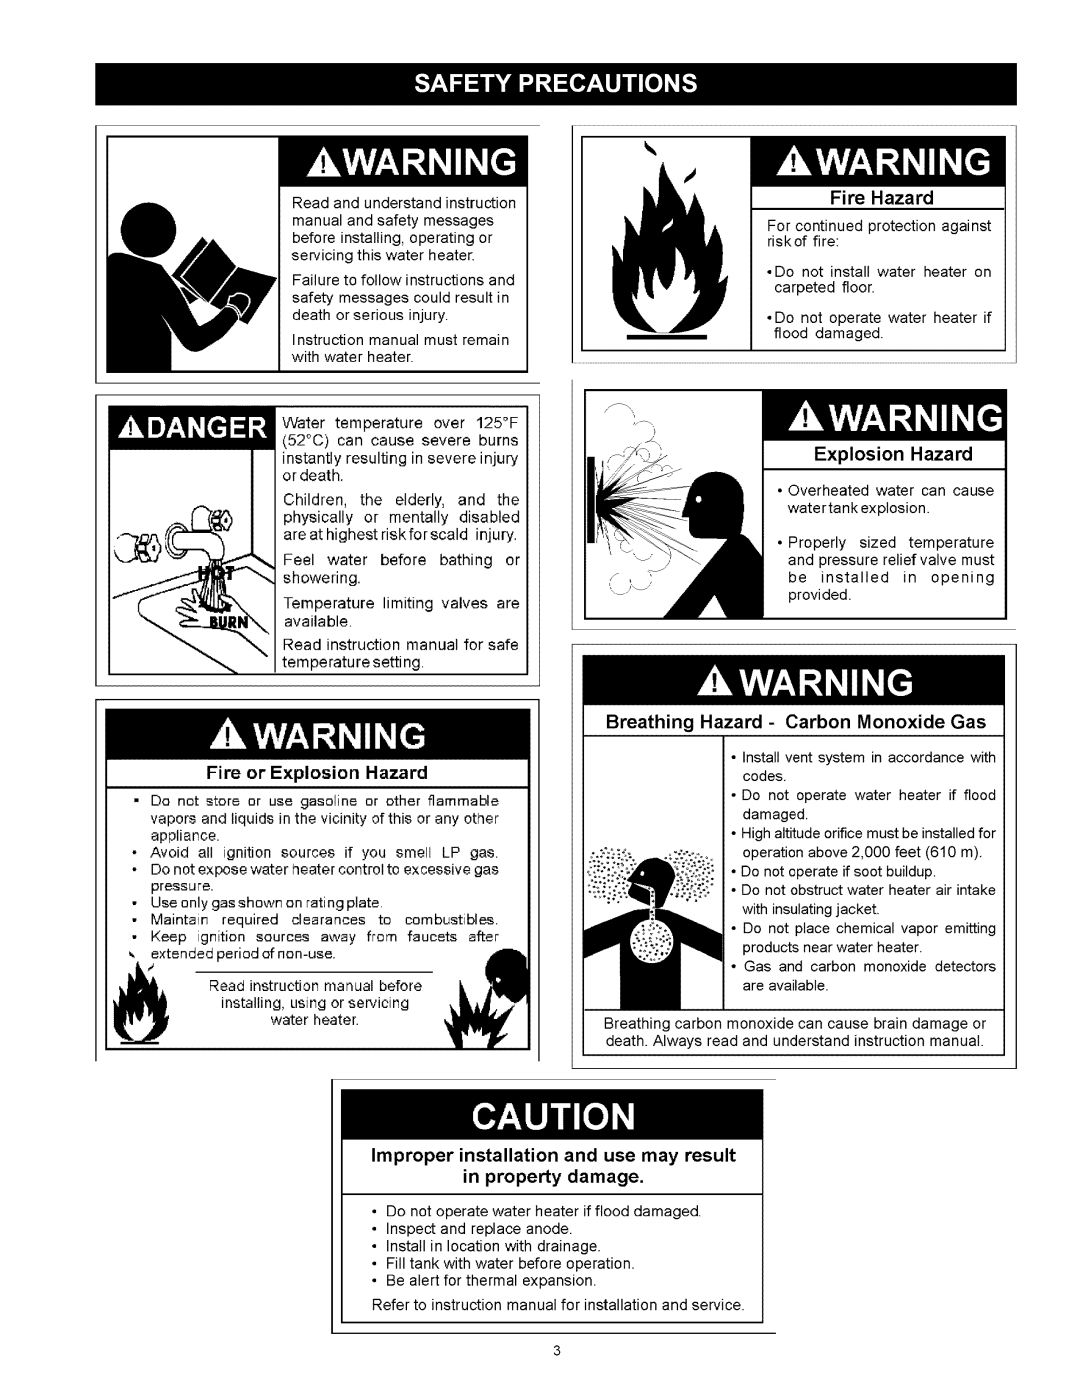 Kenmore 153.330642 Fire or Explosion Hazard, Fire Hazard, Breathing Hazard - Carbon Monoxide Gas, in property damage 